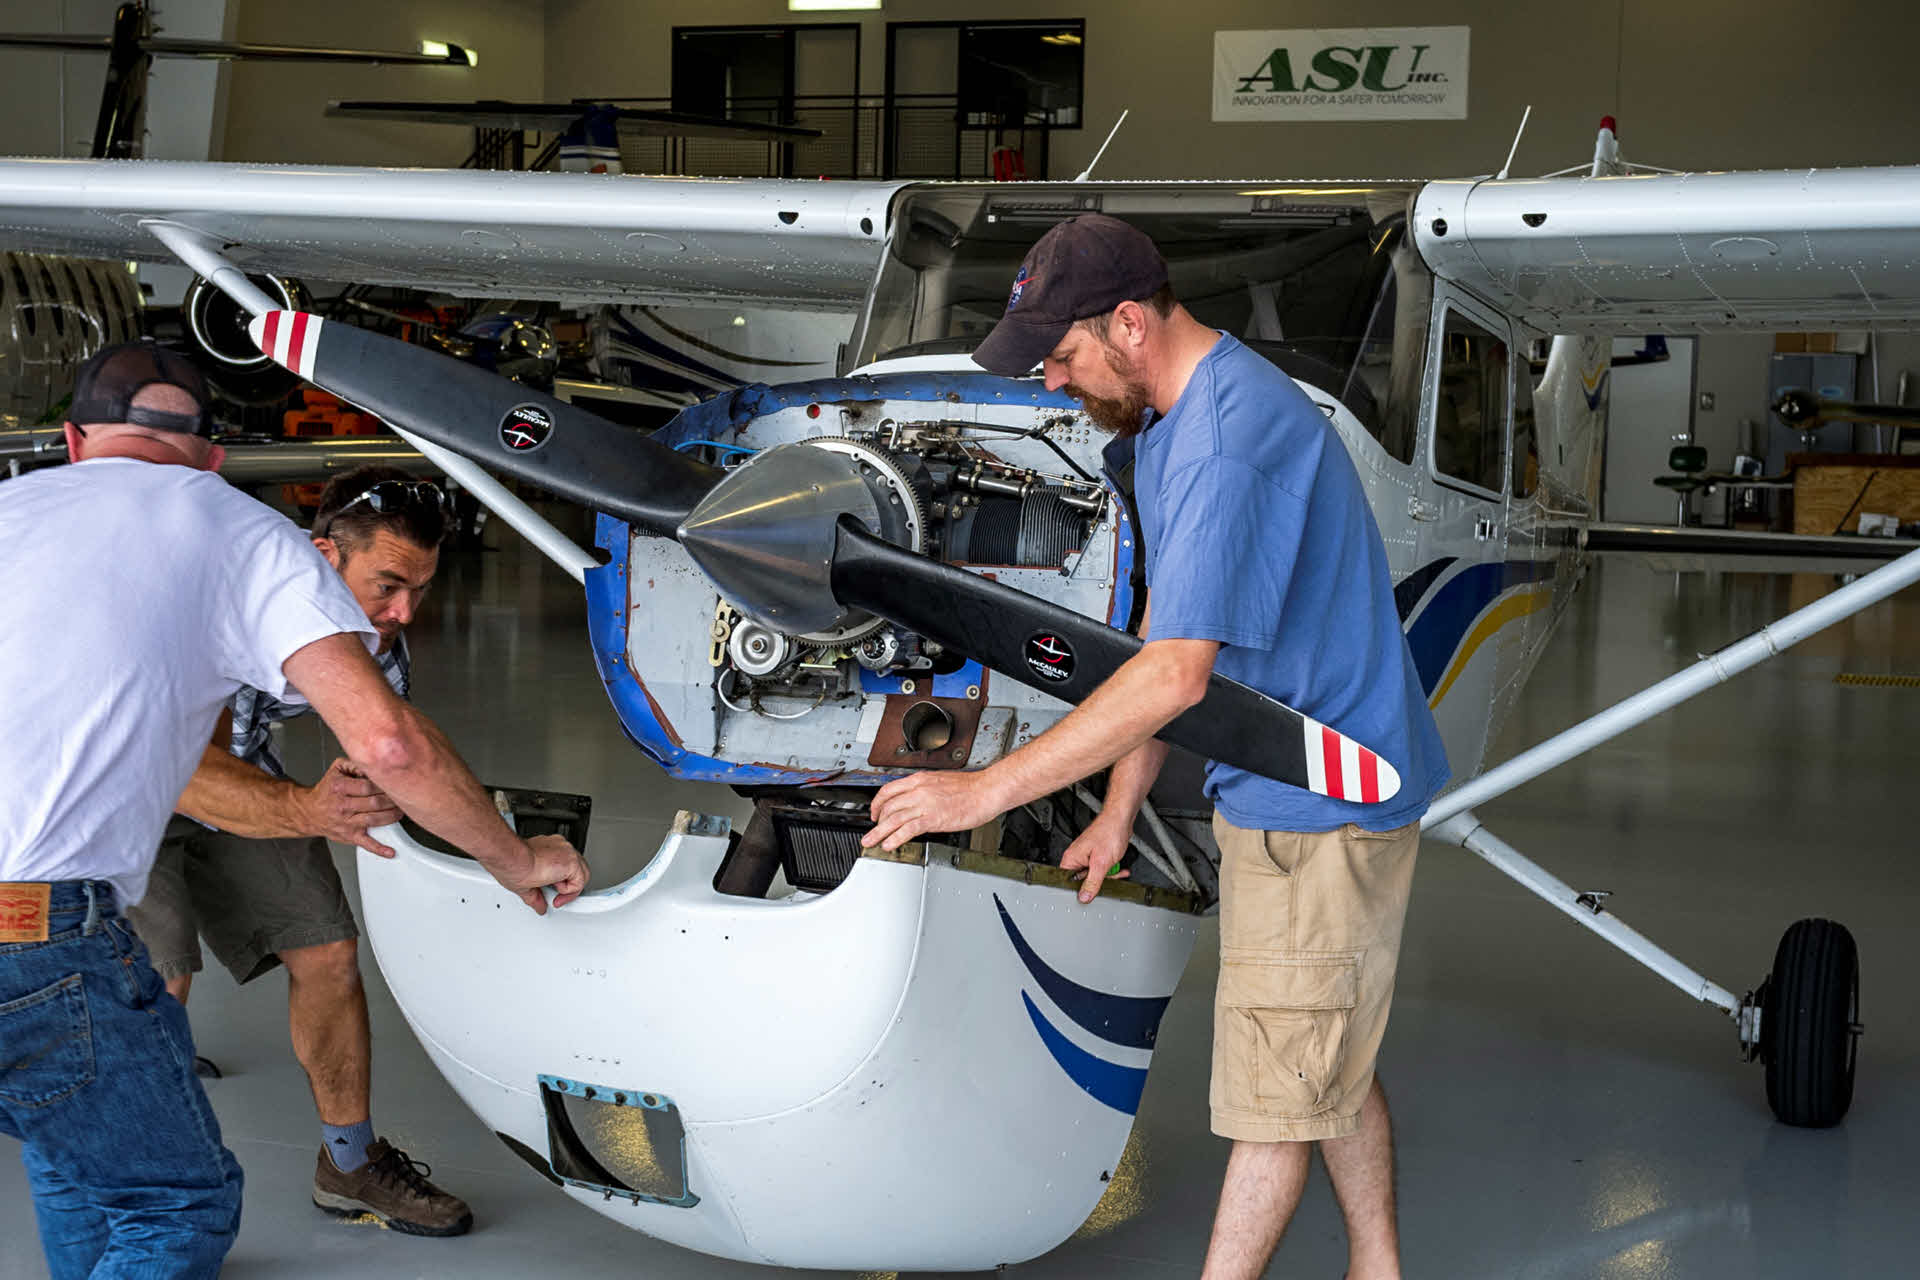 Carmel Aviation offers a private pilot license training through our flight school program.